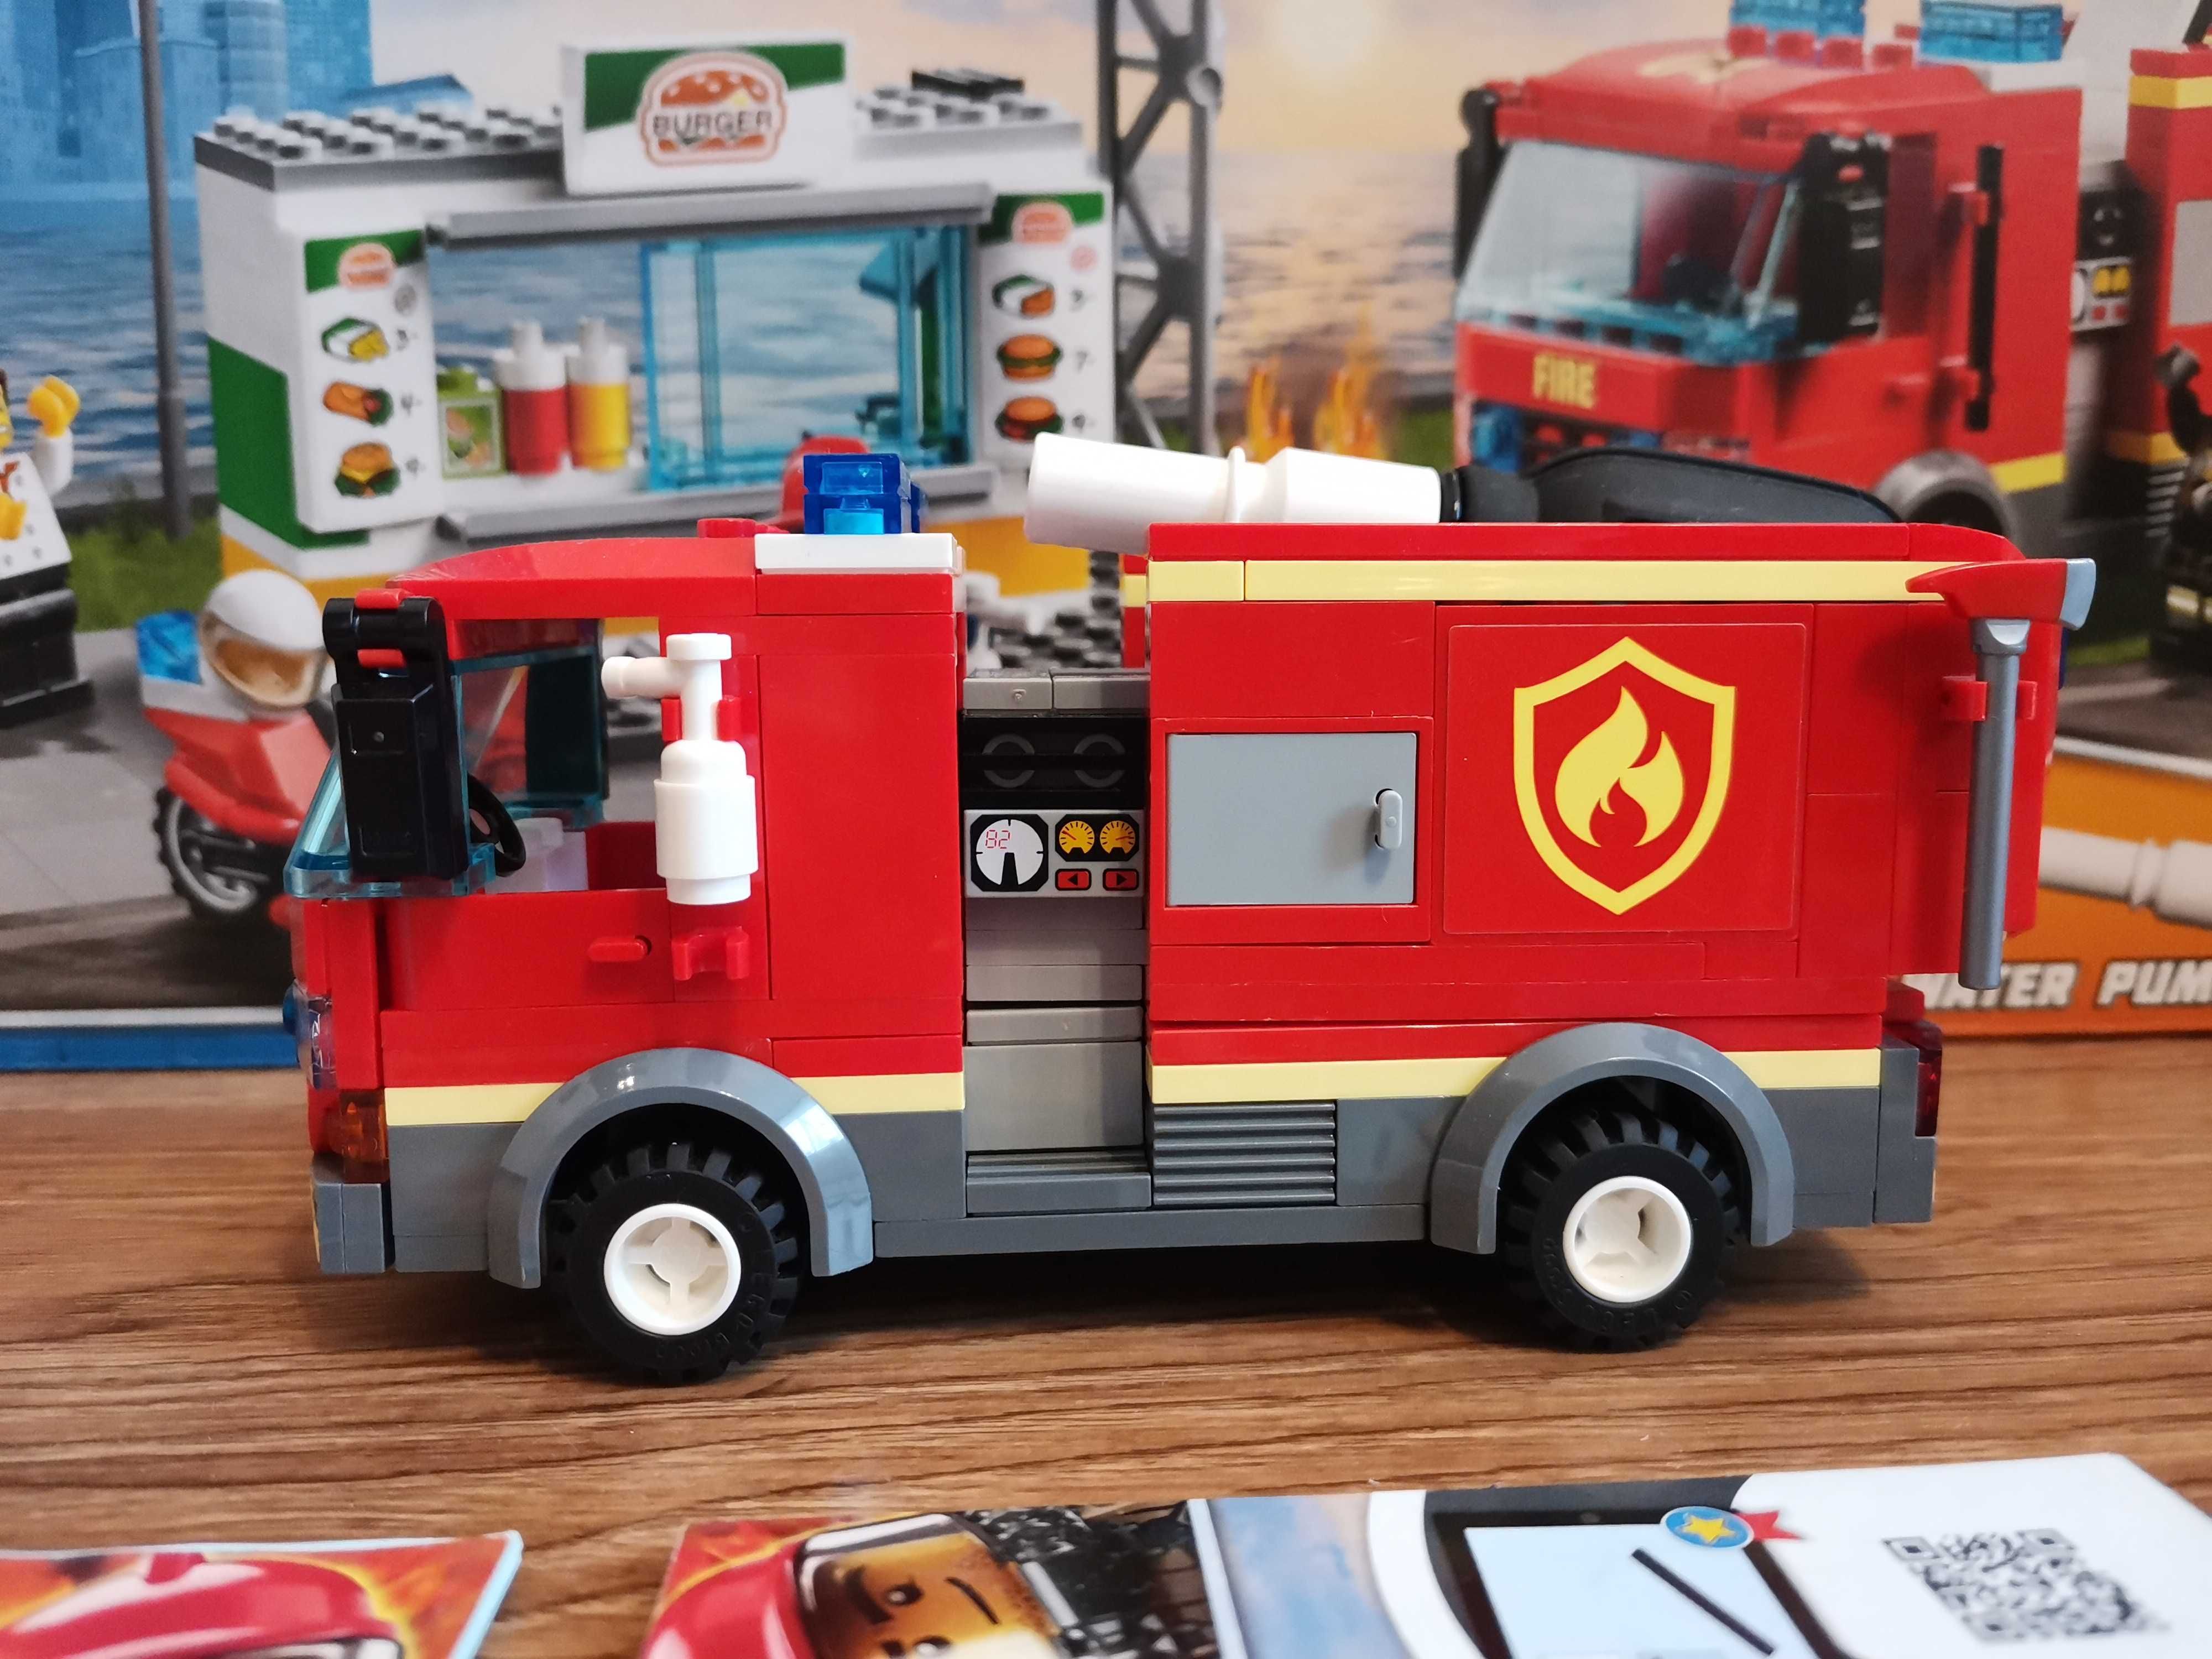 LEGO City Пожар в бургер-баре (60214)